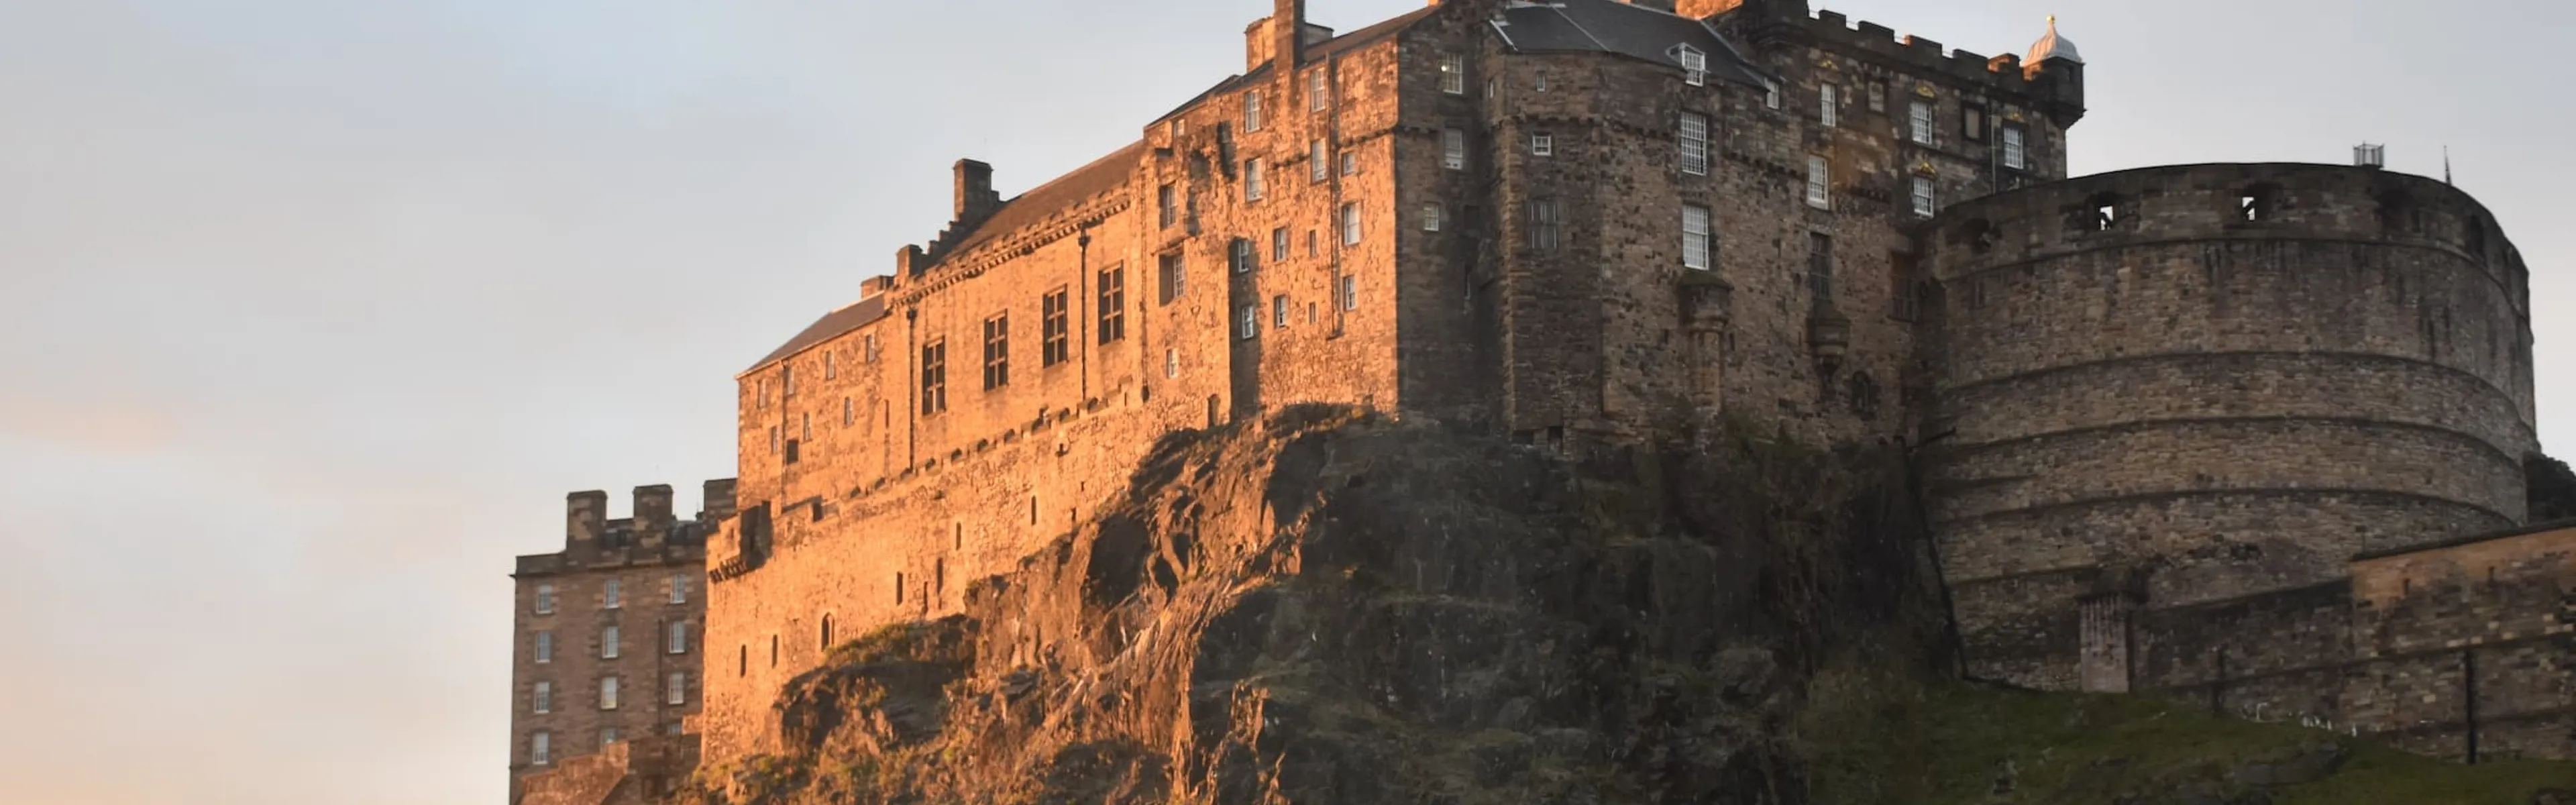 Edinburgh castle background image